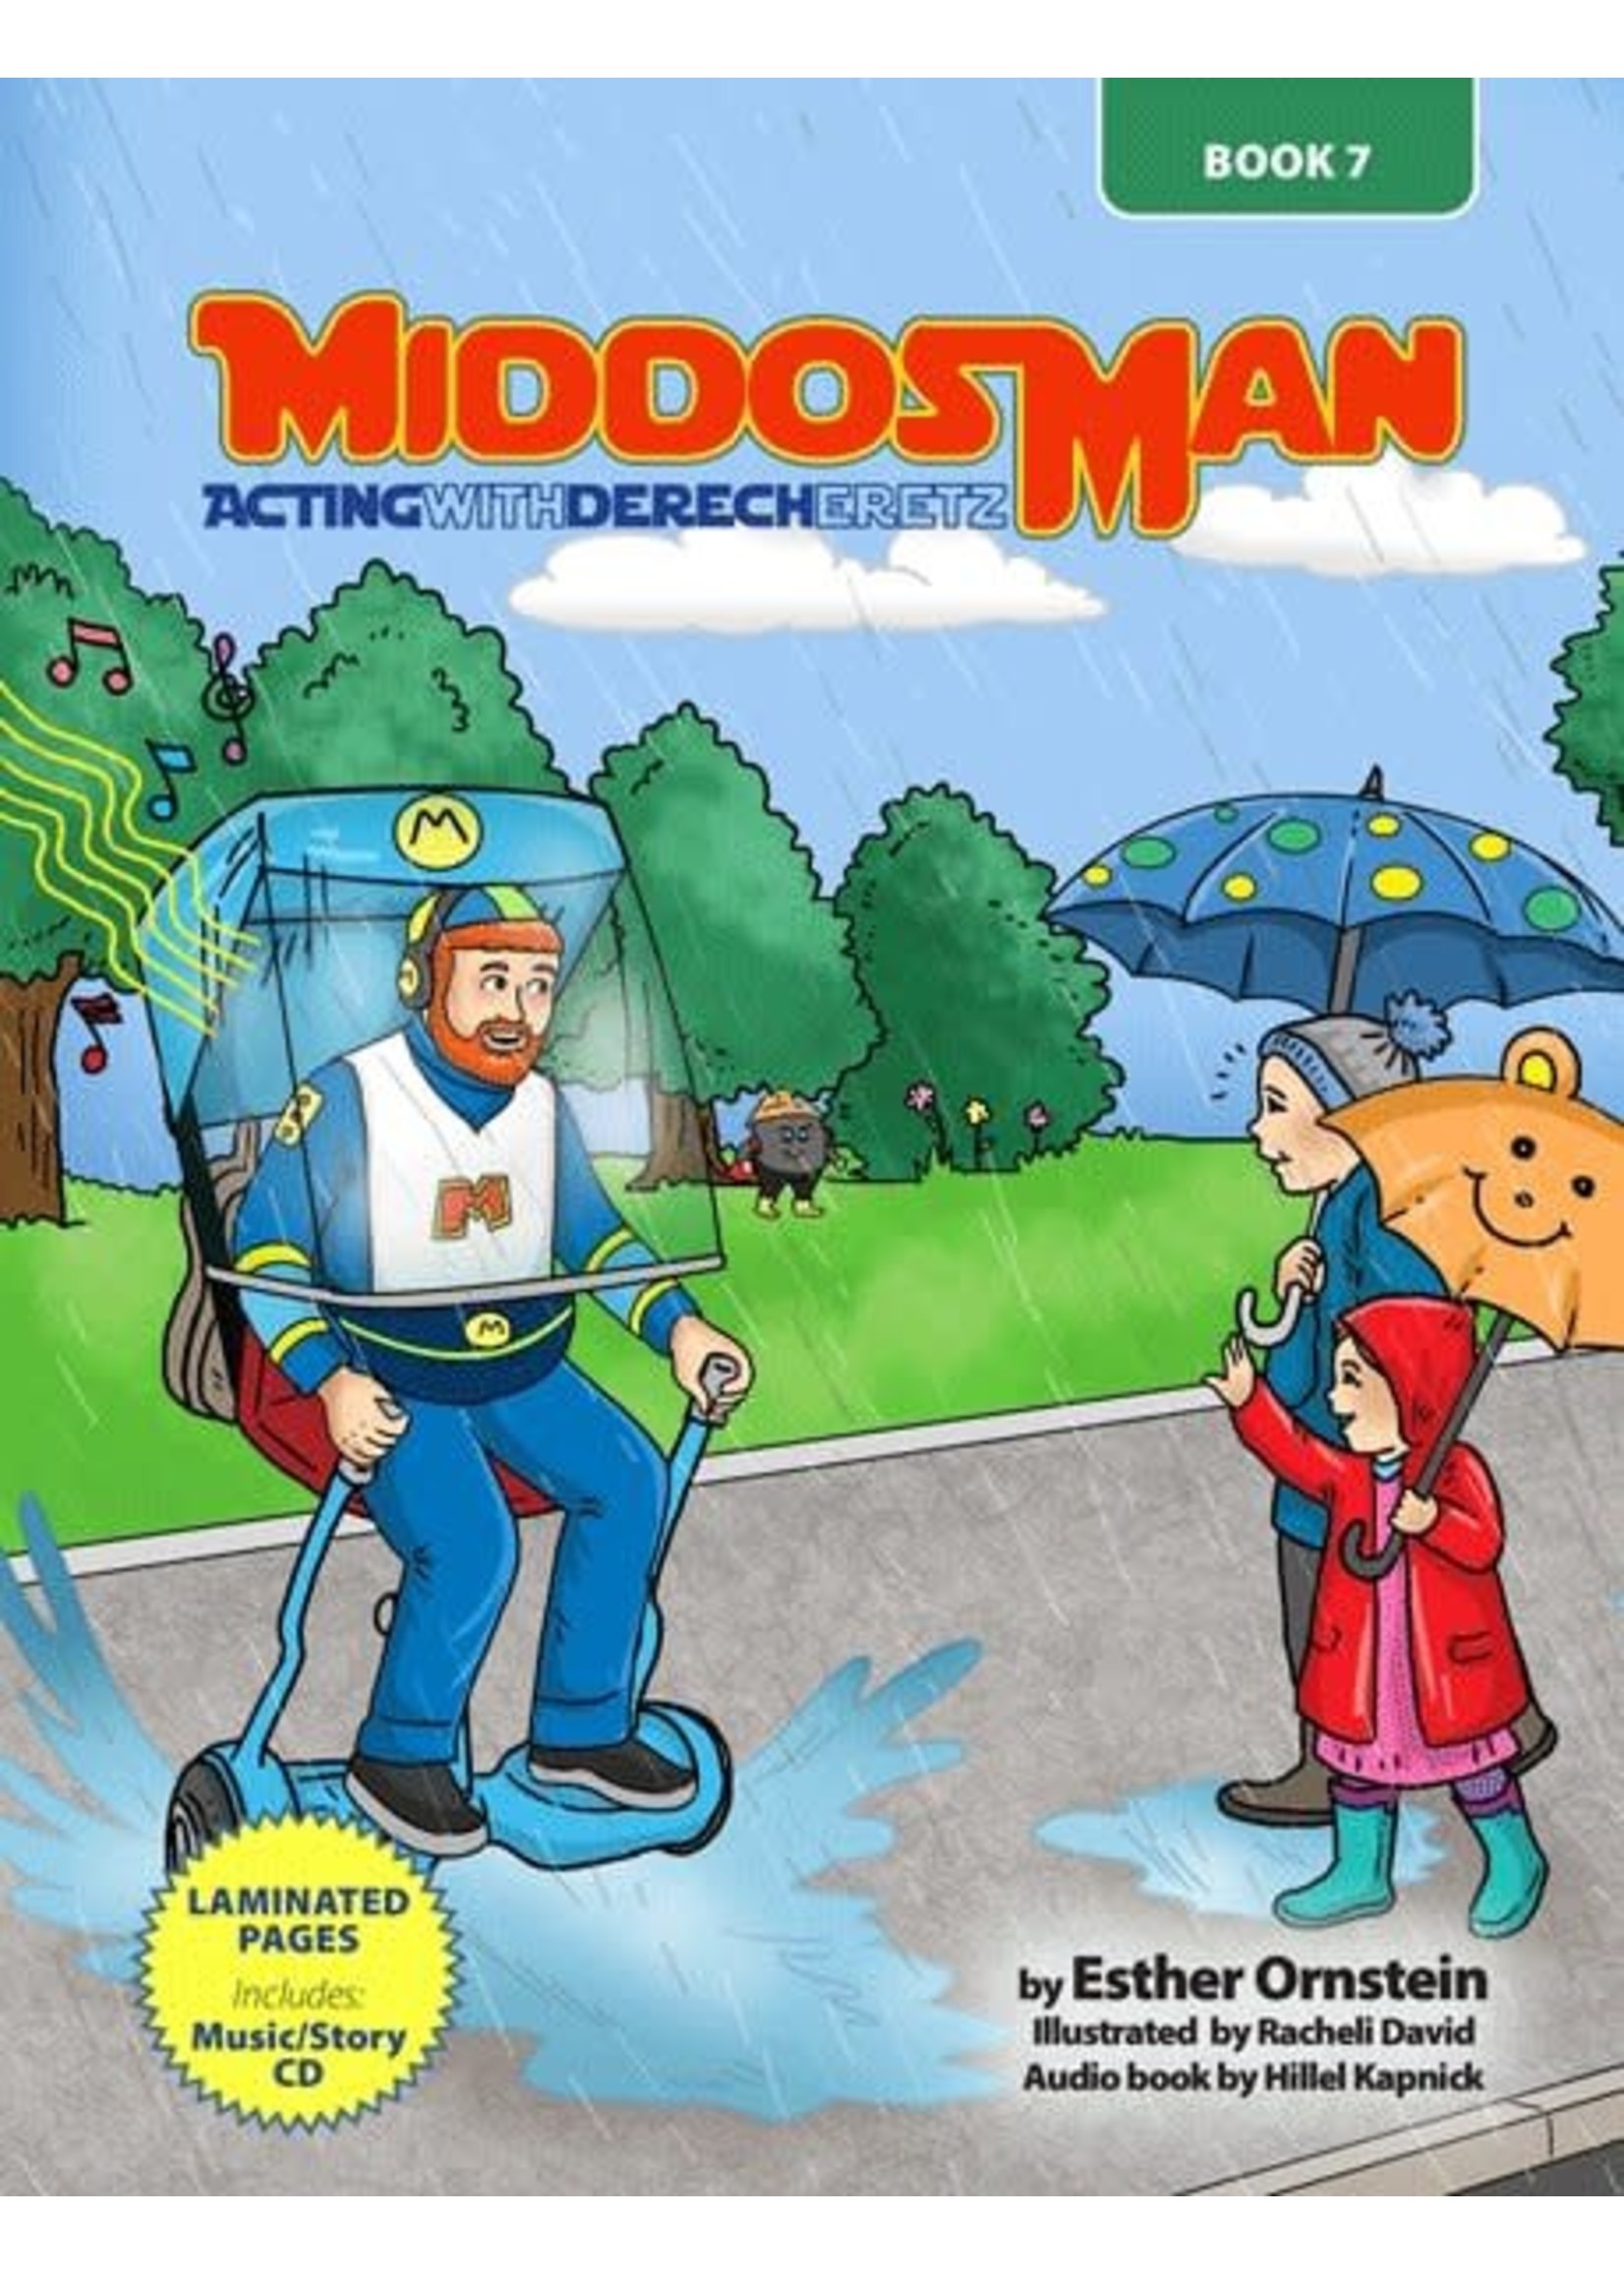 MIDDOS MAN BOOK & CD VOL 7